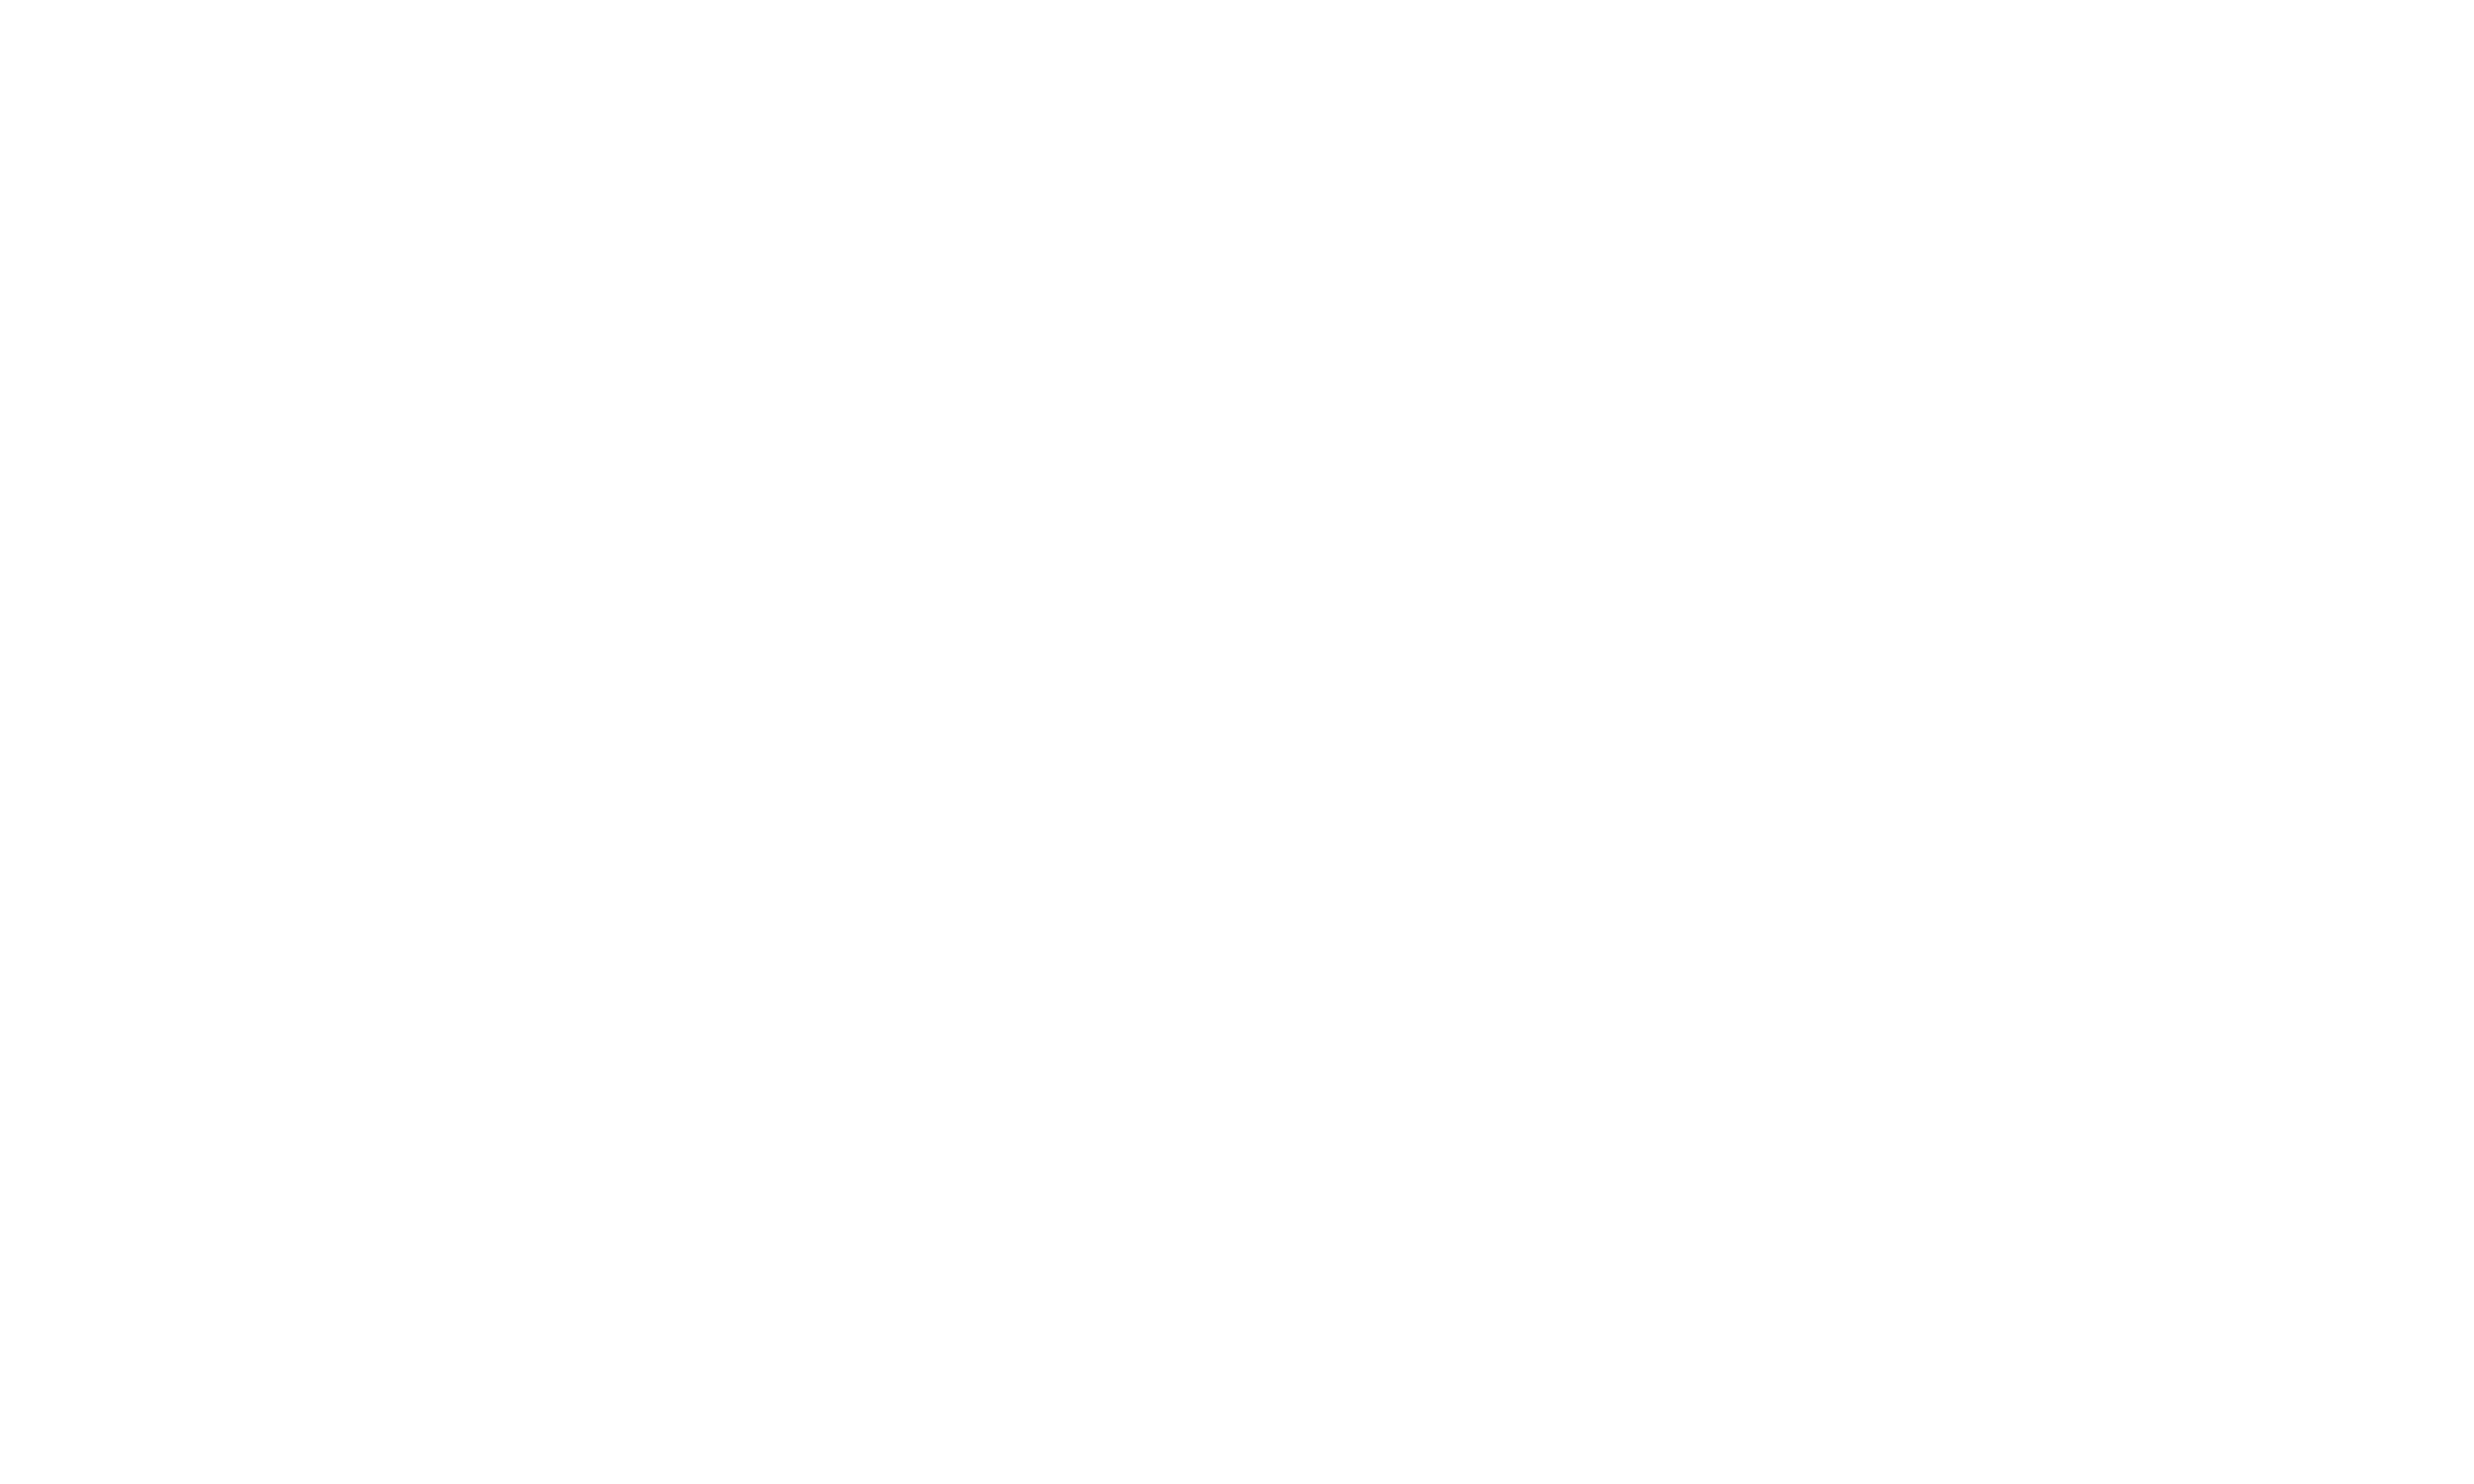 MOODMOON SELECT